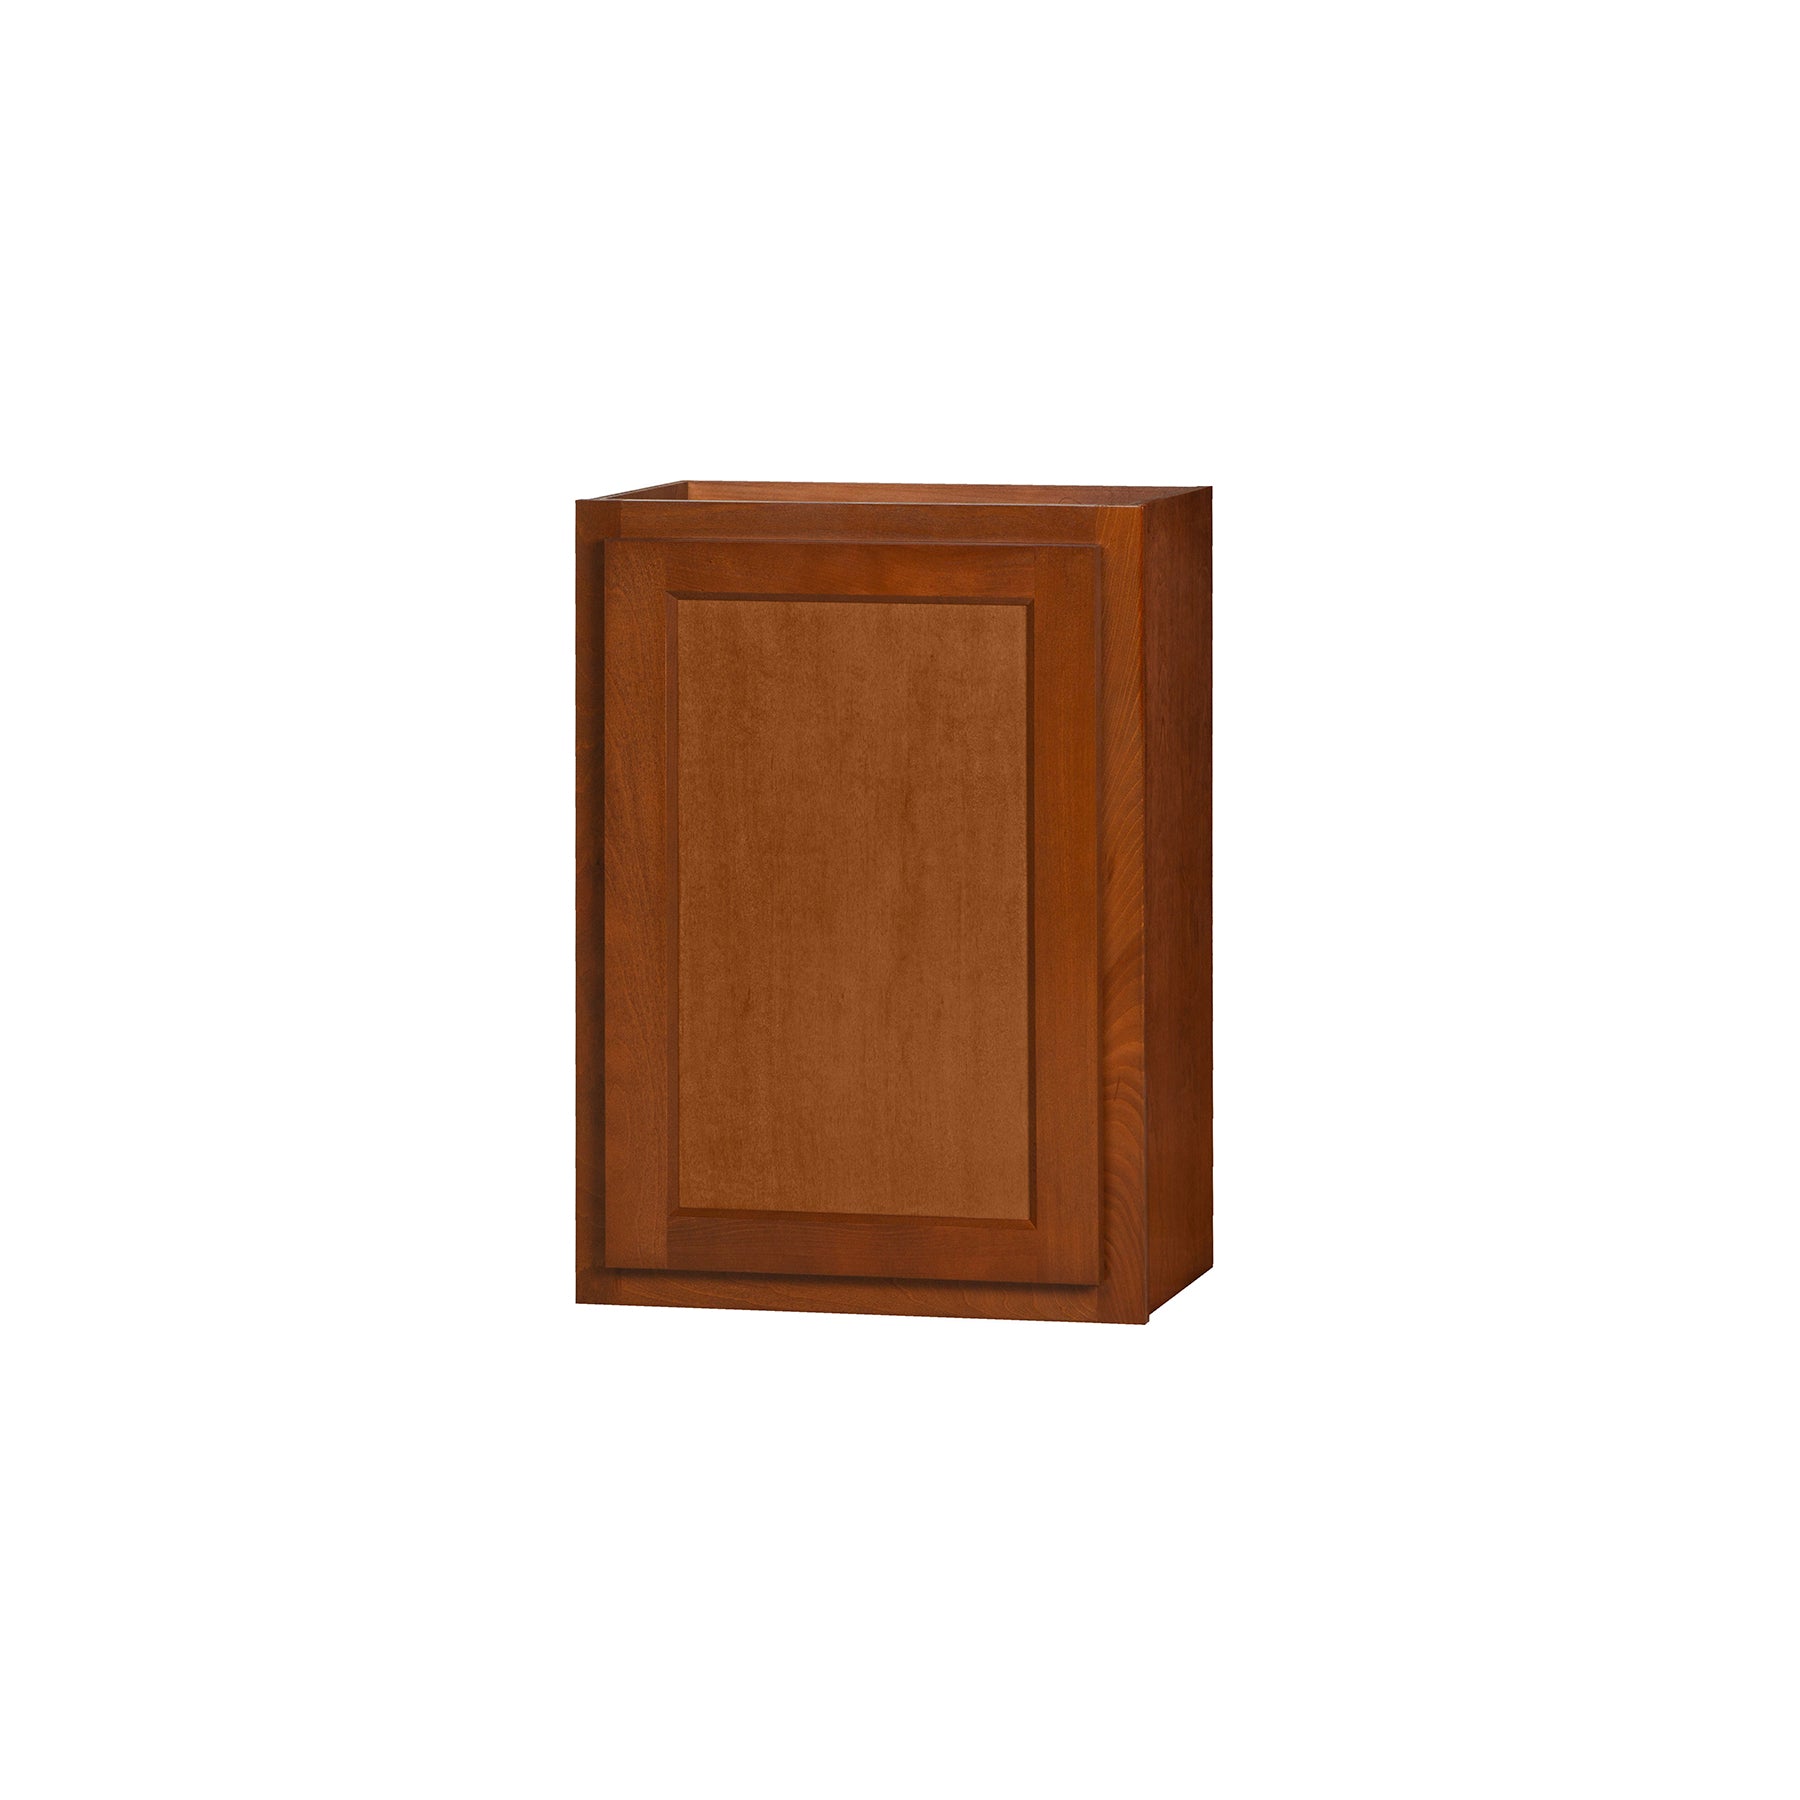 30 inch Wall Cabinets - Single Door - Glenwood Shaker - 21 Inch W x 30 Inch H x 12 Inch D